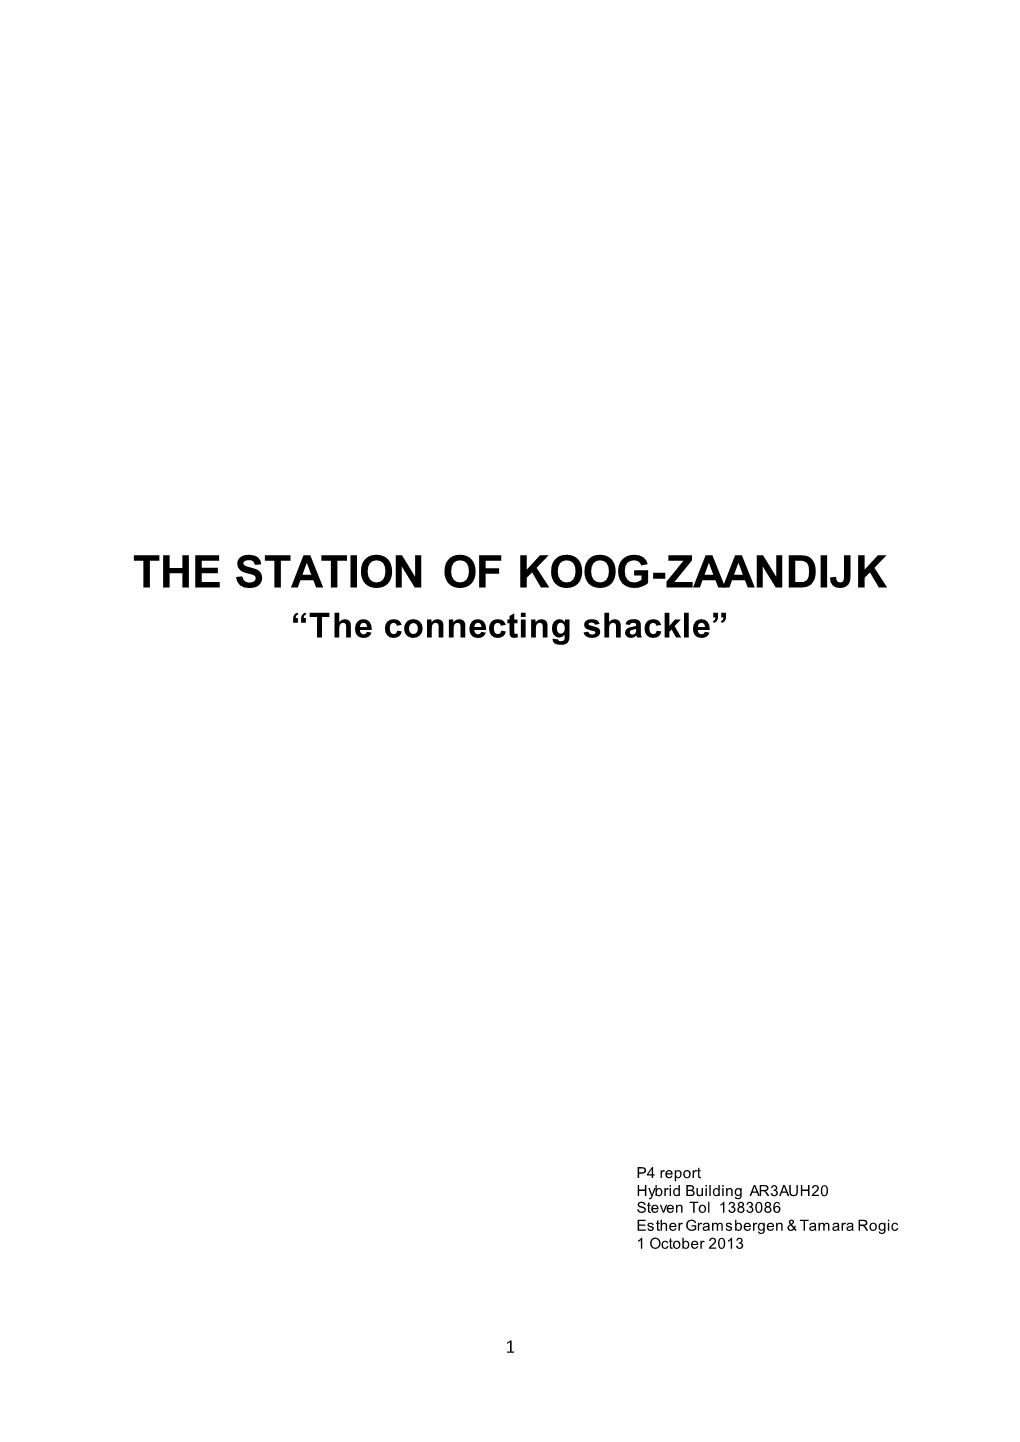 THE STATION of KOOG-ZAANDIJK “The Connecting Shackle”